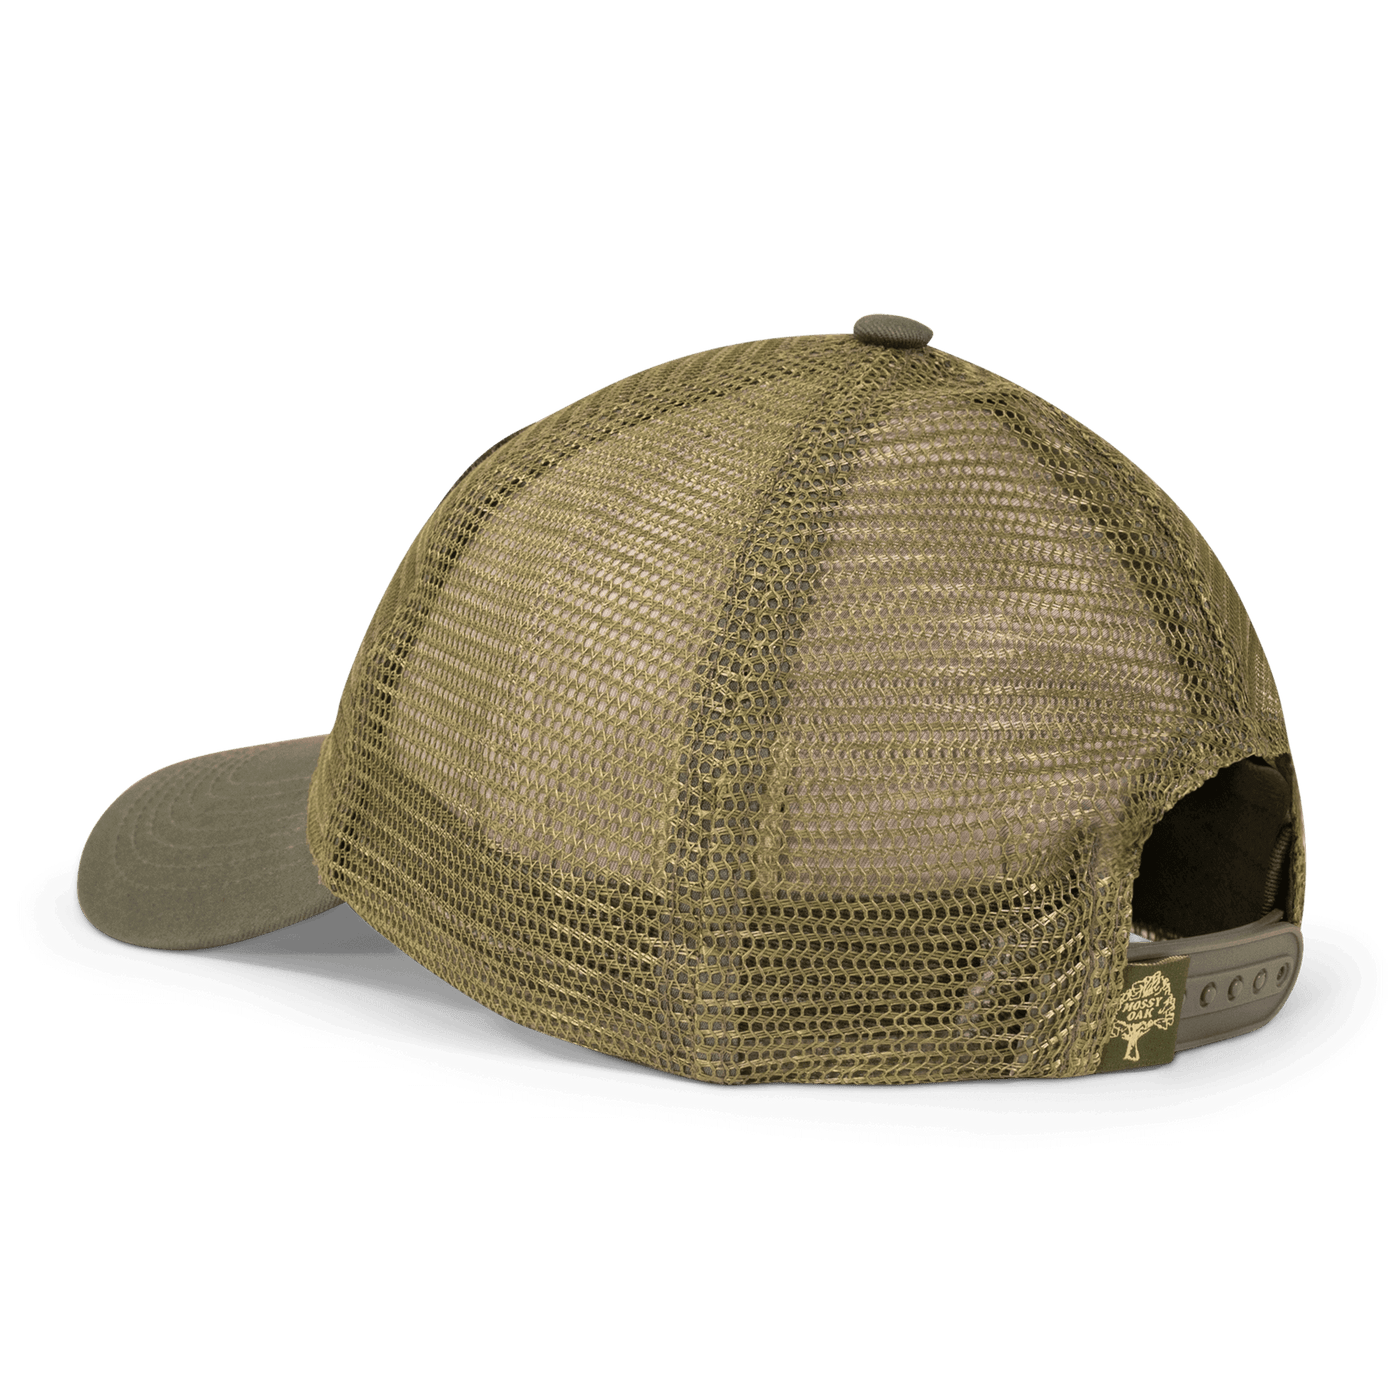 Vintage Mesh Hat